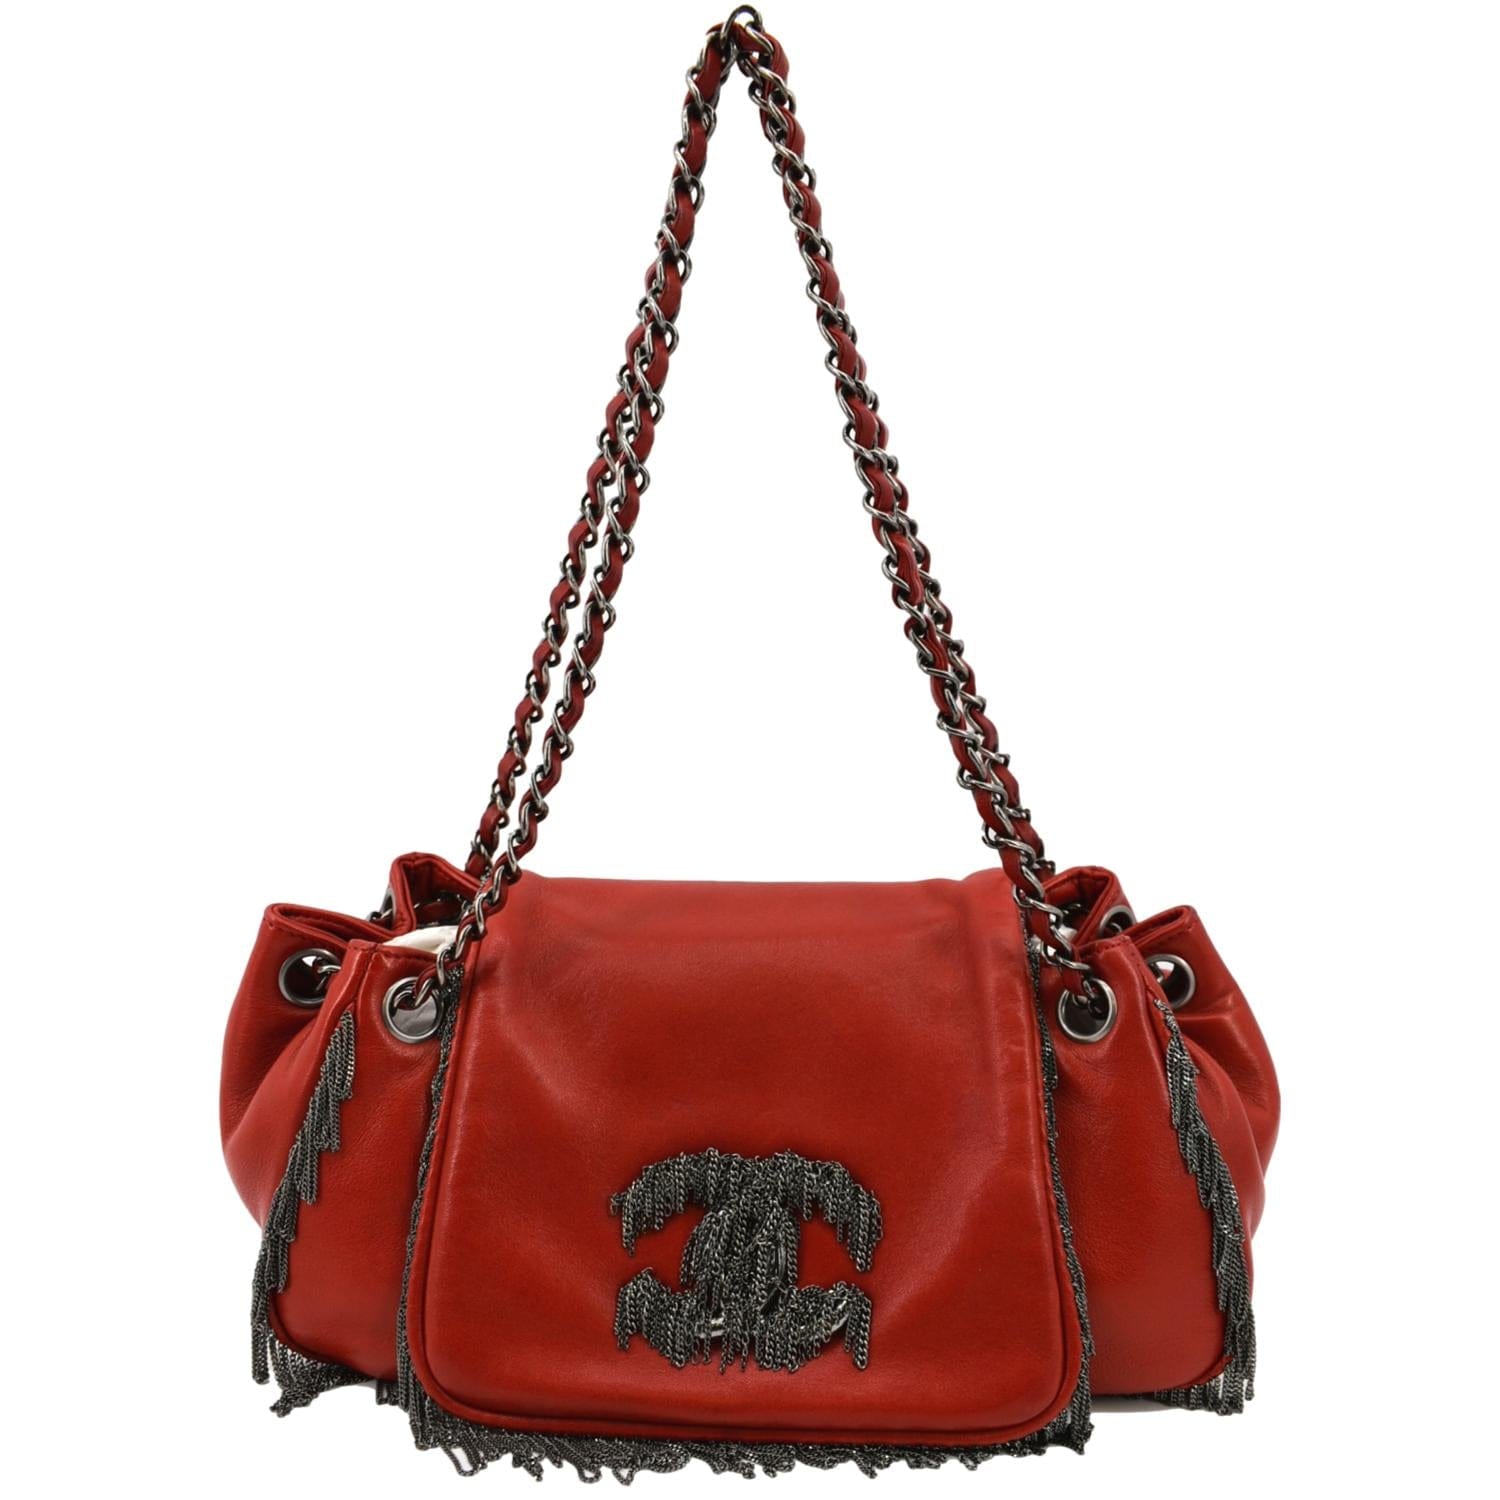 CHANEL Chain Fringe Flap Lambskin Leather Shoulder Bag Red